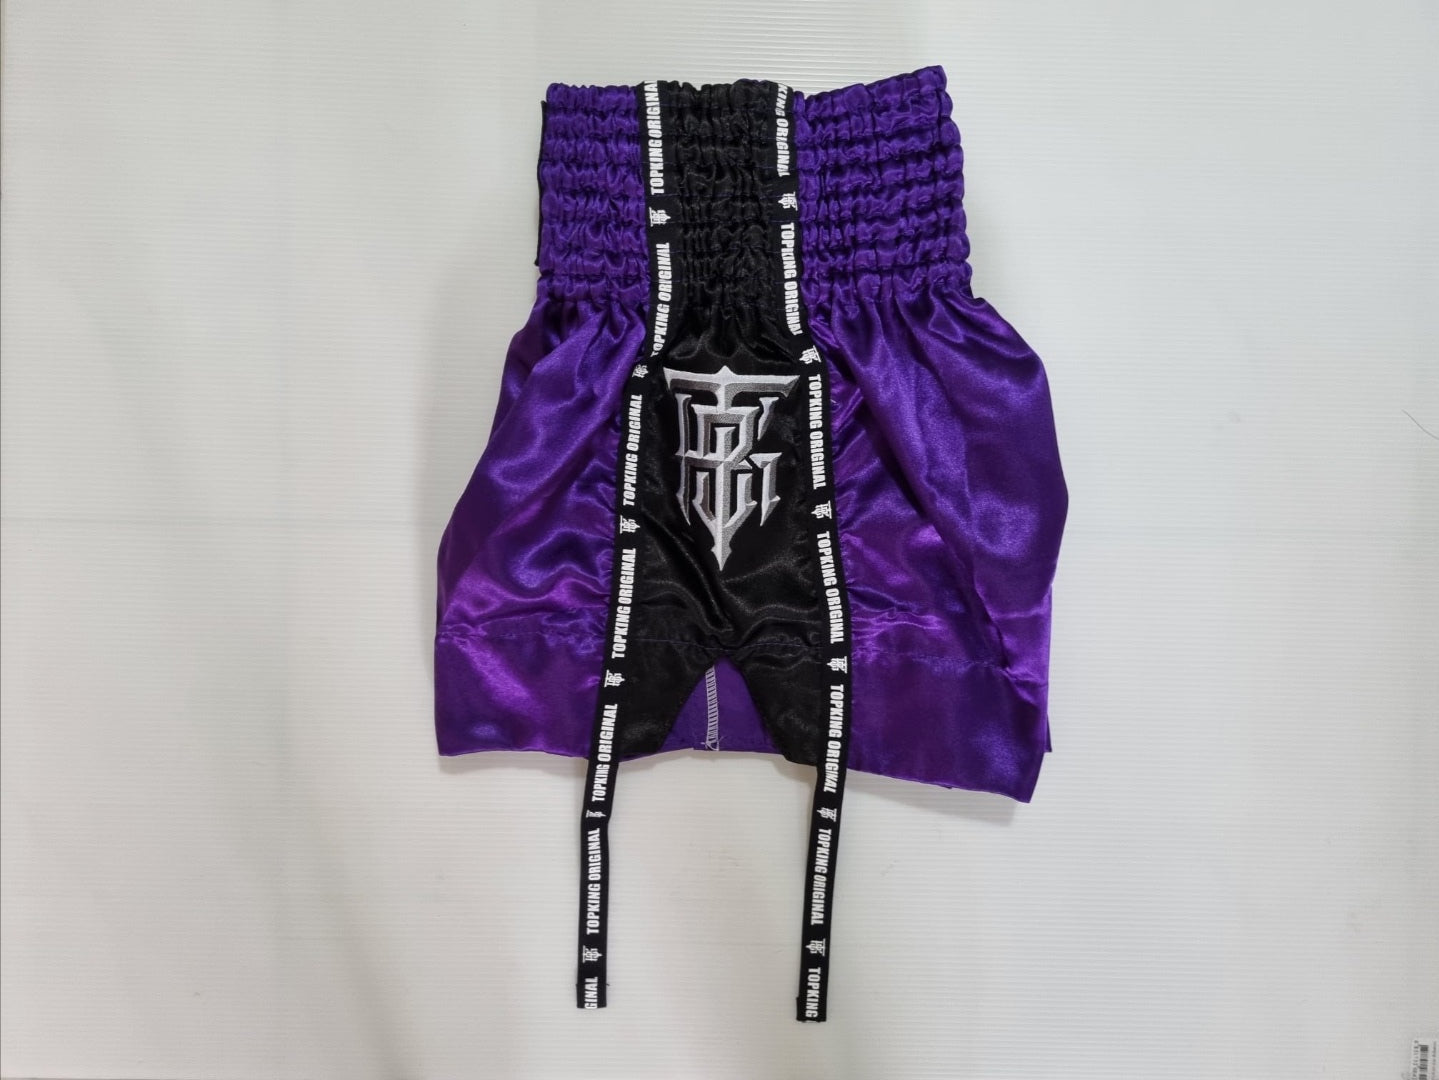 TKB Thai Boxing Shorts -  TKTBS-201 - Purple/Black